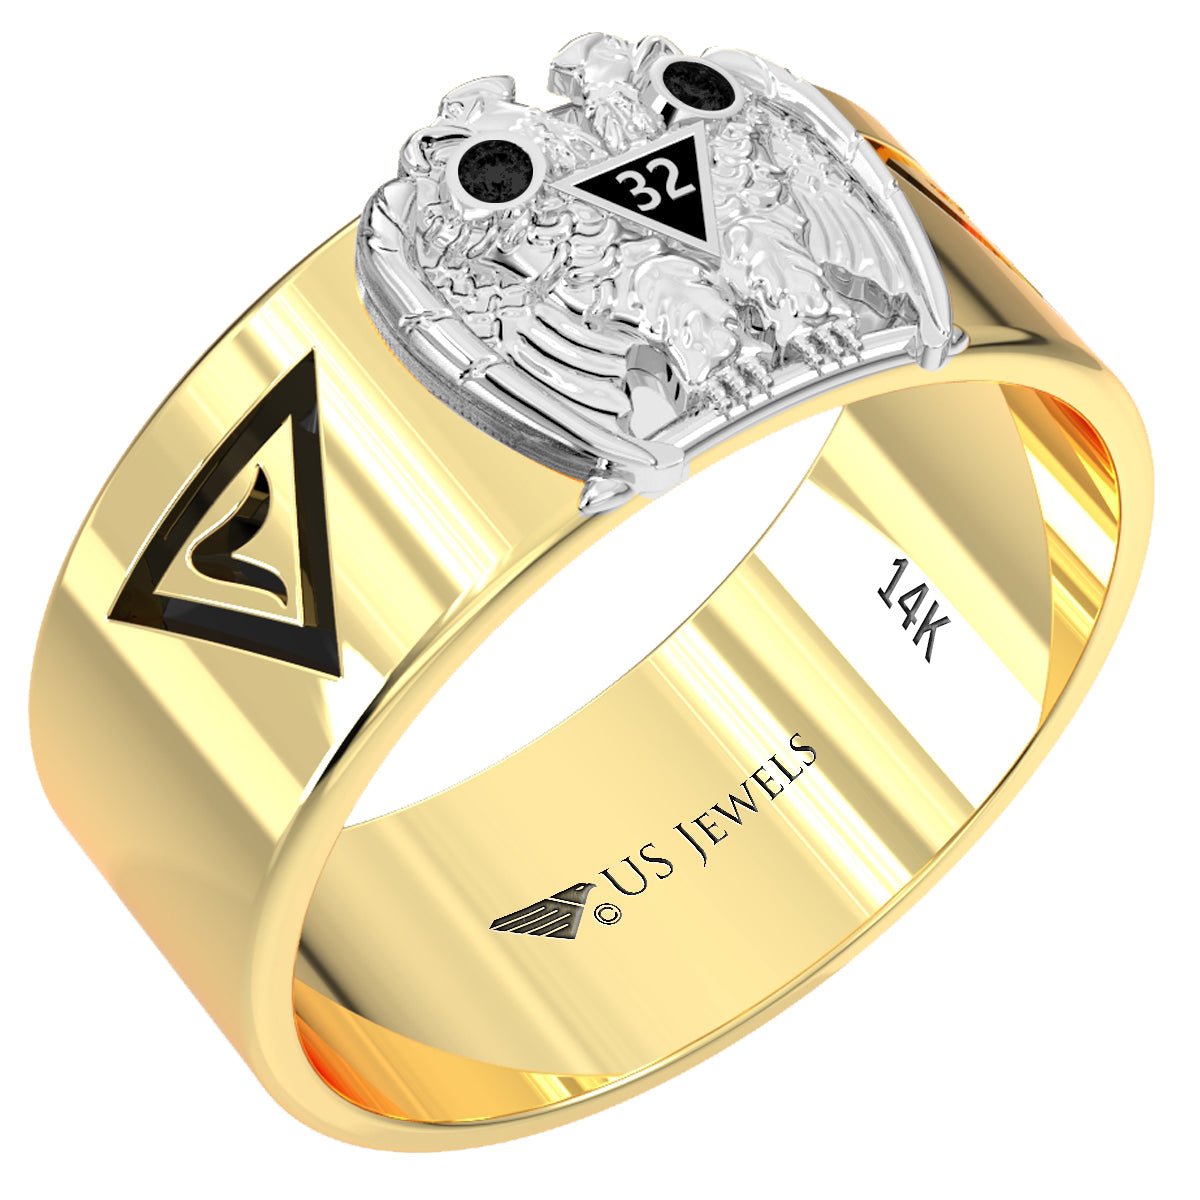 Customizable 14k White or Yellow Gold Scottish Rite 32nd Degree Masonic Ring - US Jewels